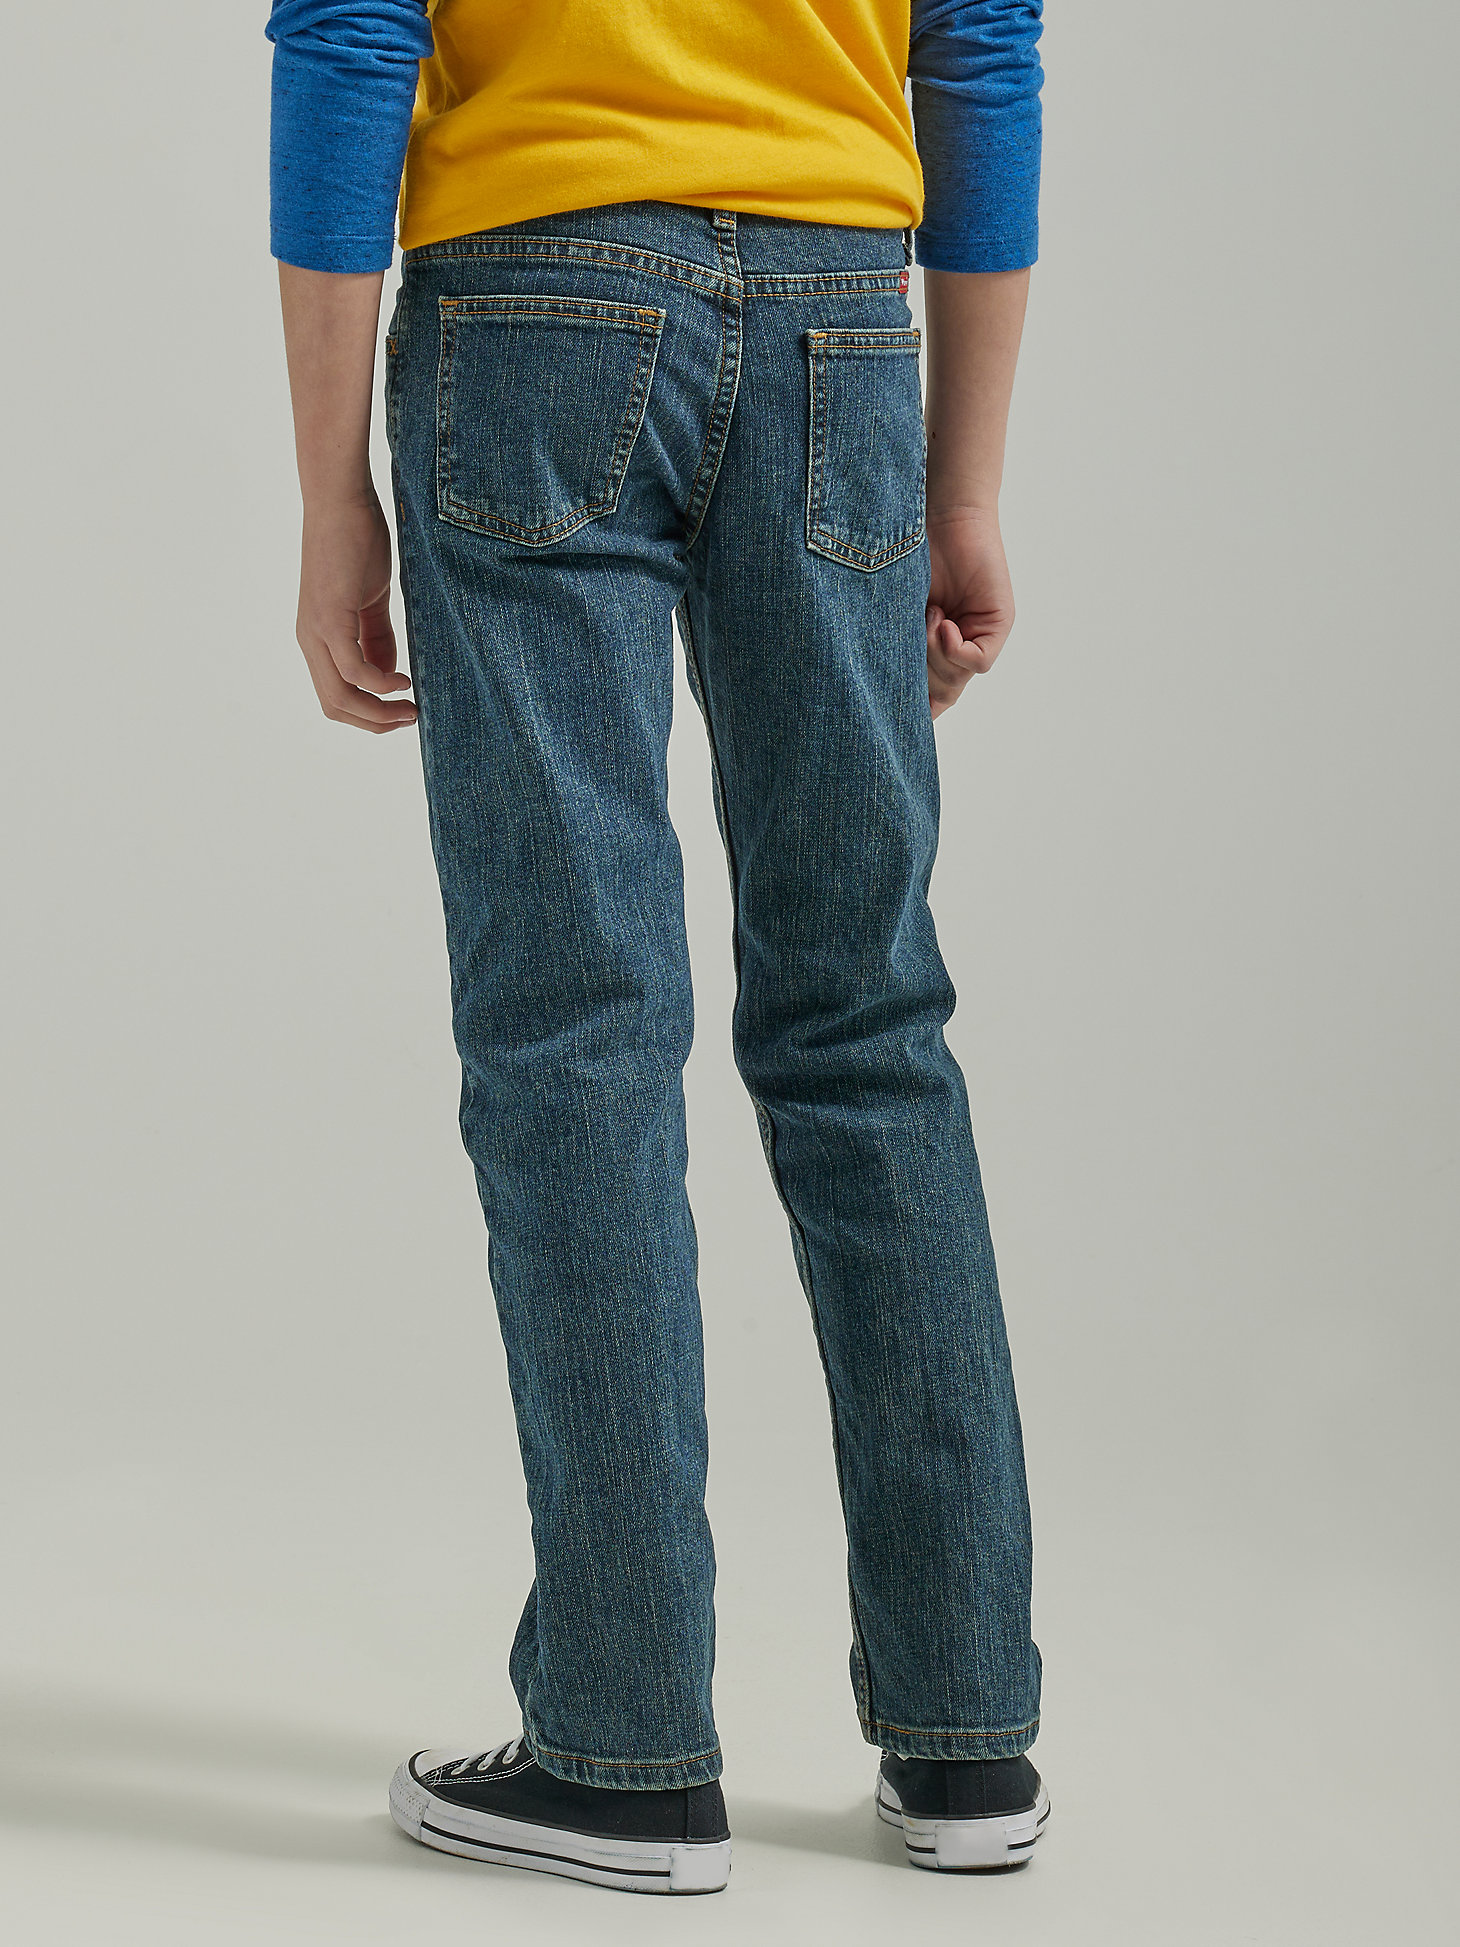 Boy's Wrangler® Five Star Classic Straight Fit Jean (8-16) in Sunkissed Denim alternative view 1